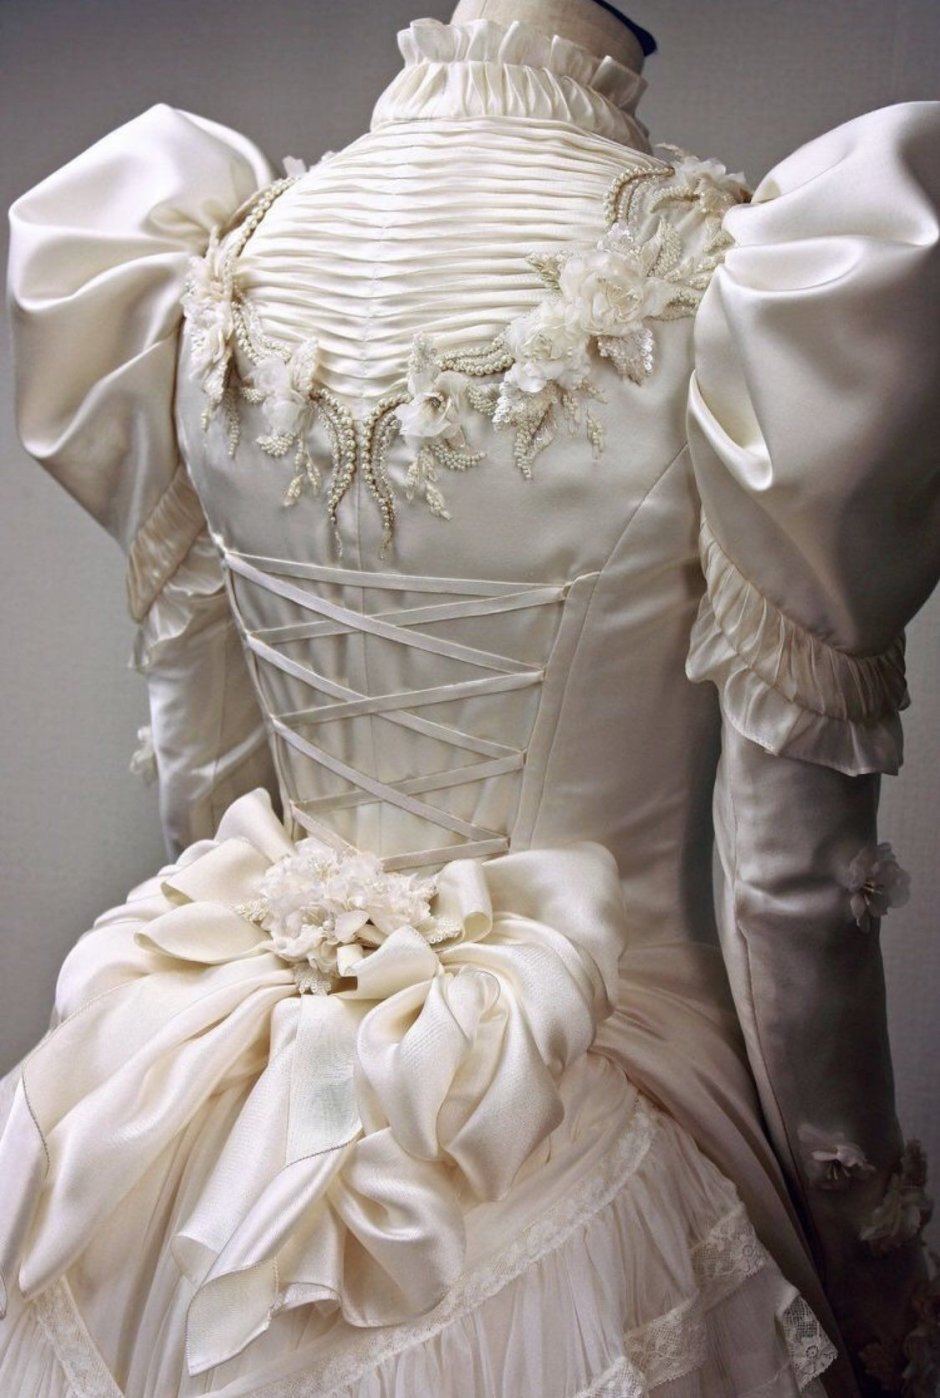 Викториан Веддинг (Victorian Wedding)